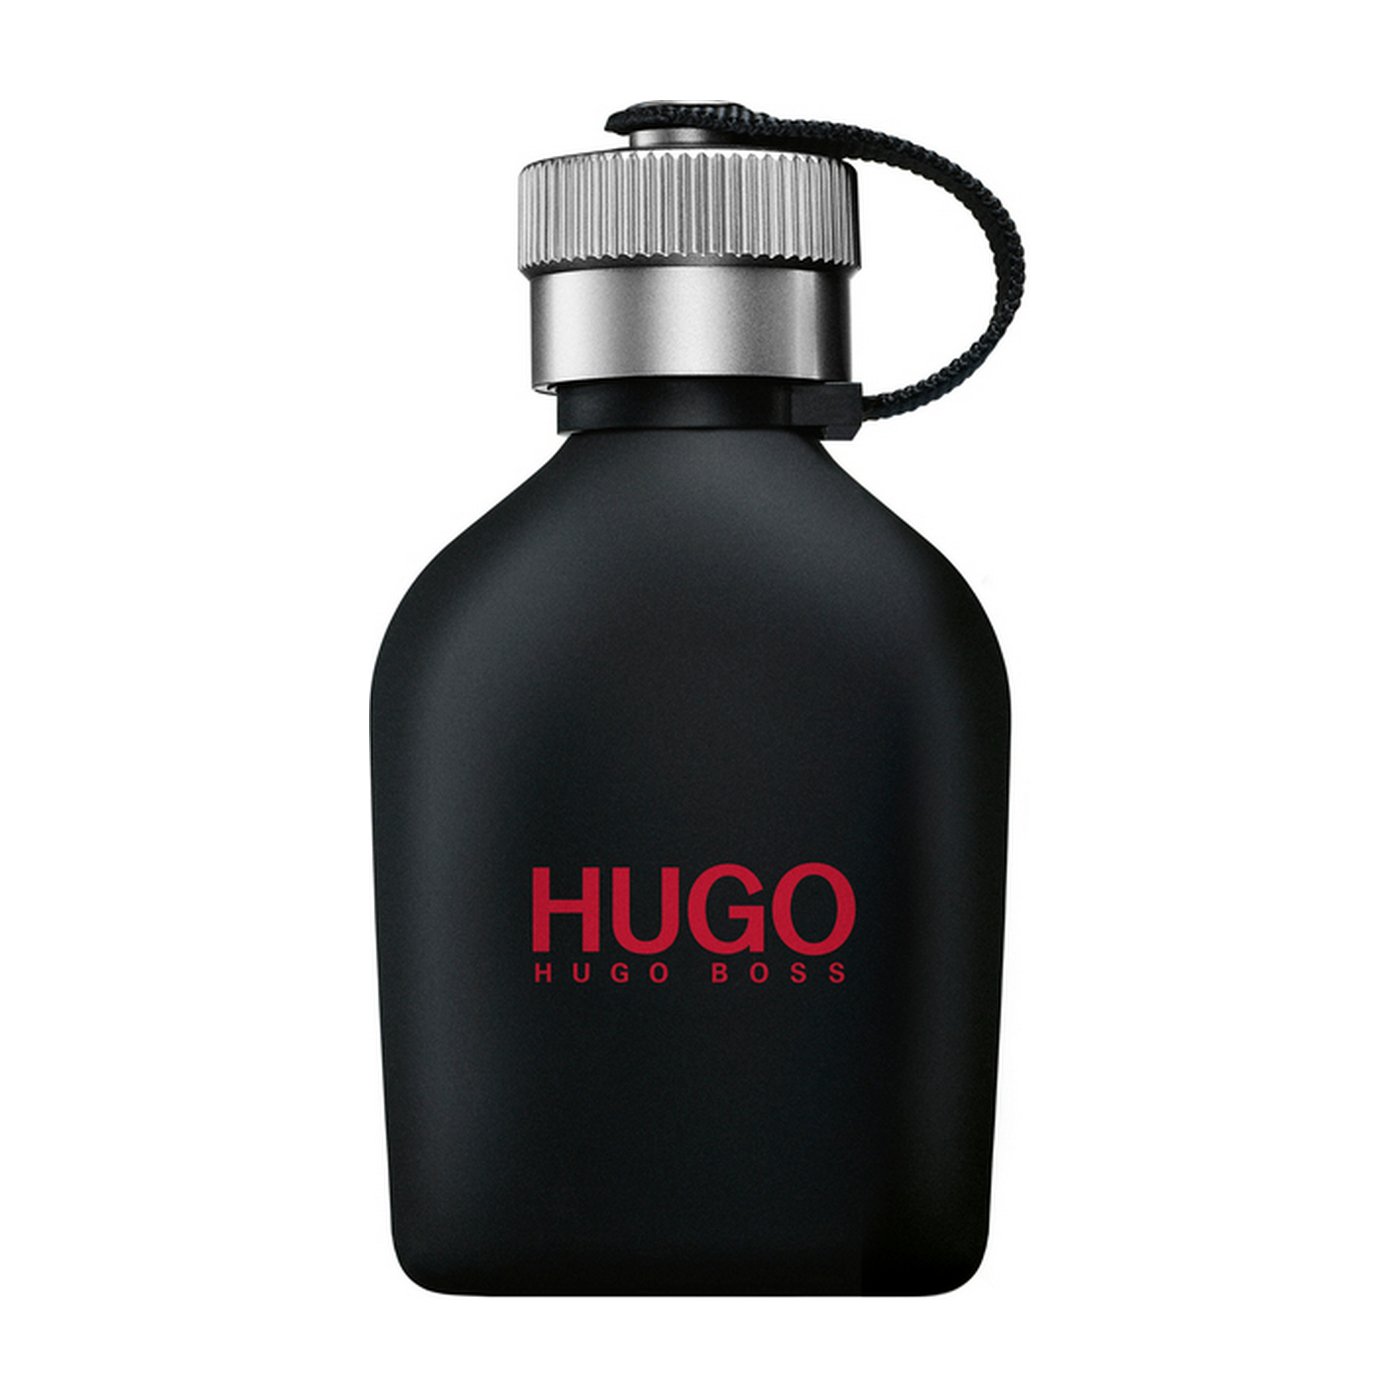 Хуго босс сайт. Hugo "Hugo Boss just different" 100 ml. Hugo Boss "Hugo just different" EDT, 100ml. Hugo Boss Hugo just different [m] EDT - 125ml. Hugo Boss Hugo men 100 мл.